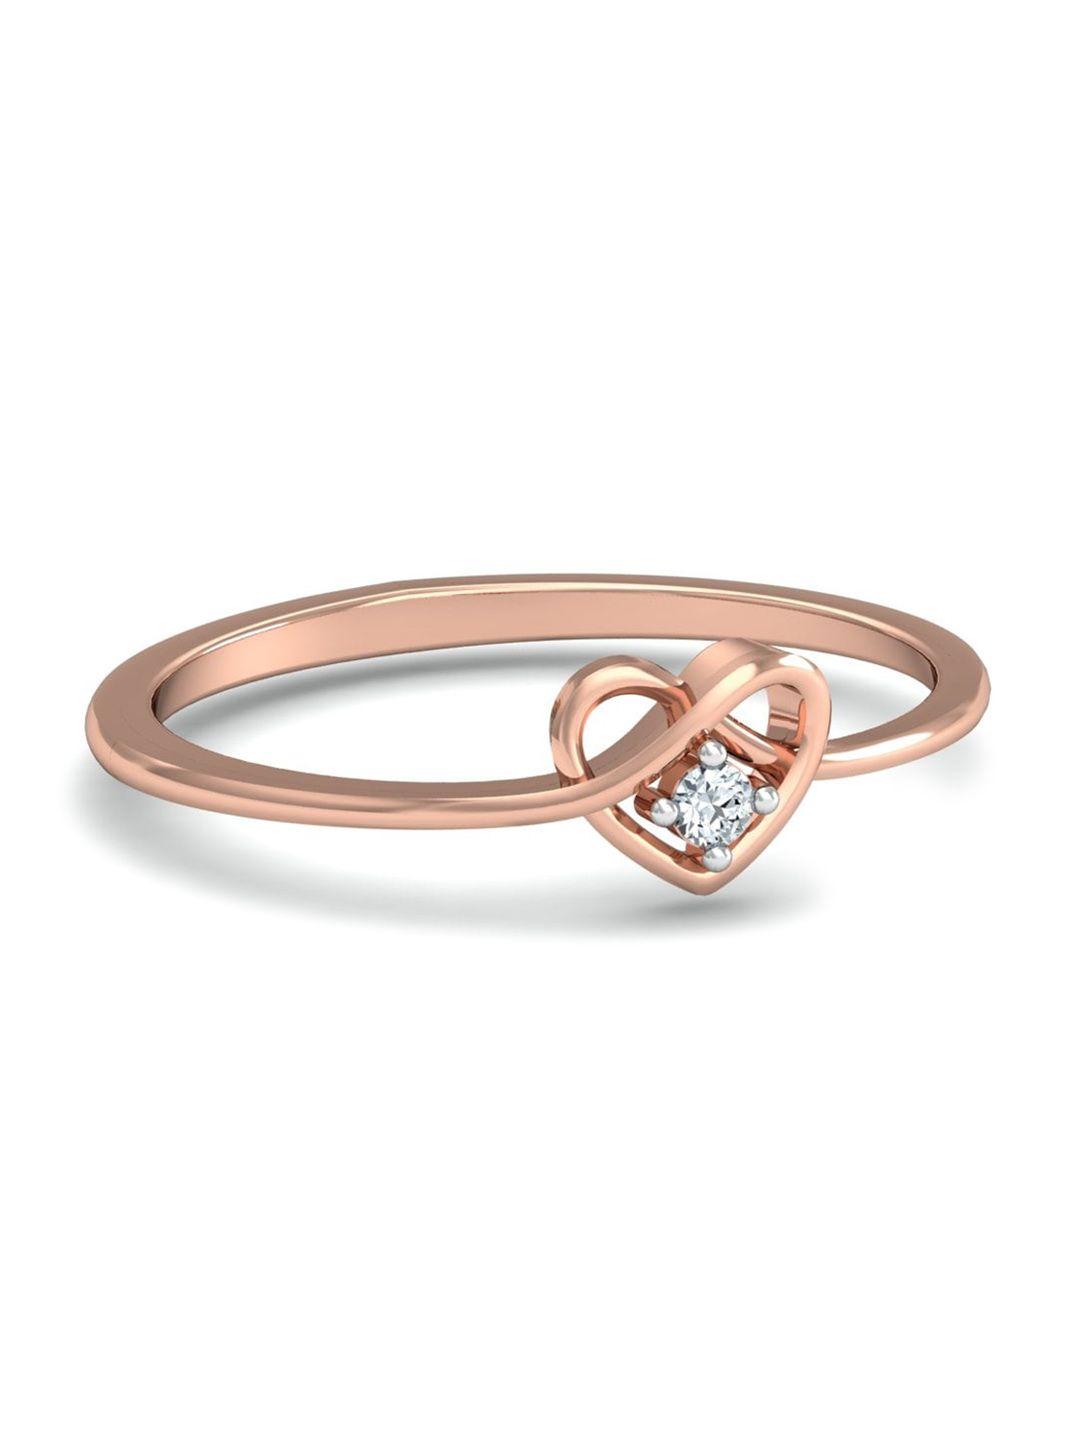 kuberbox 18kt rose gold diamond studded ring-1.11gm